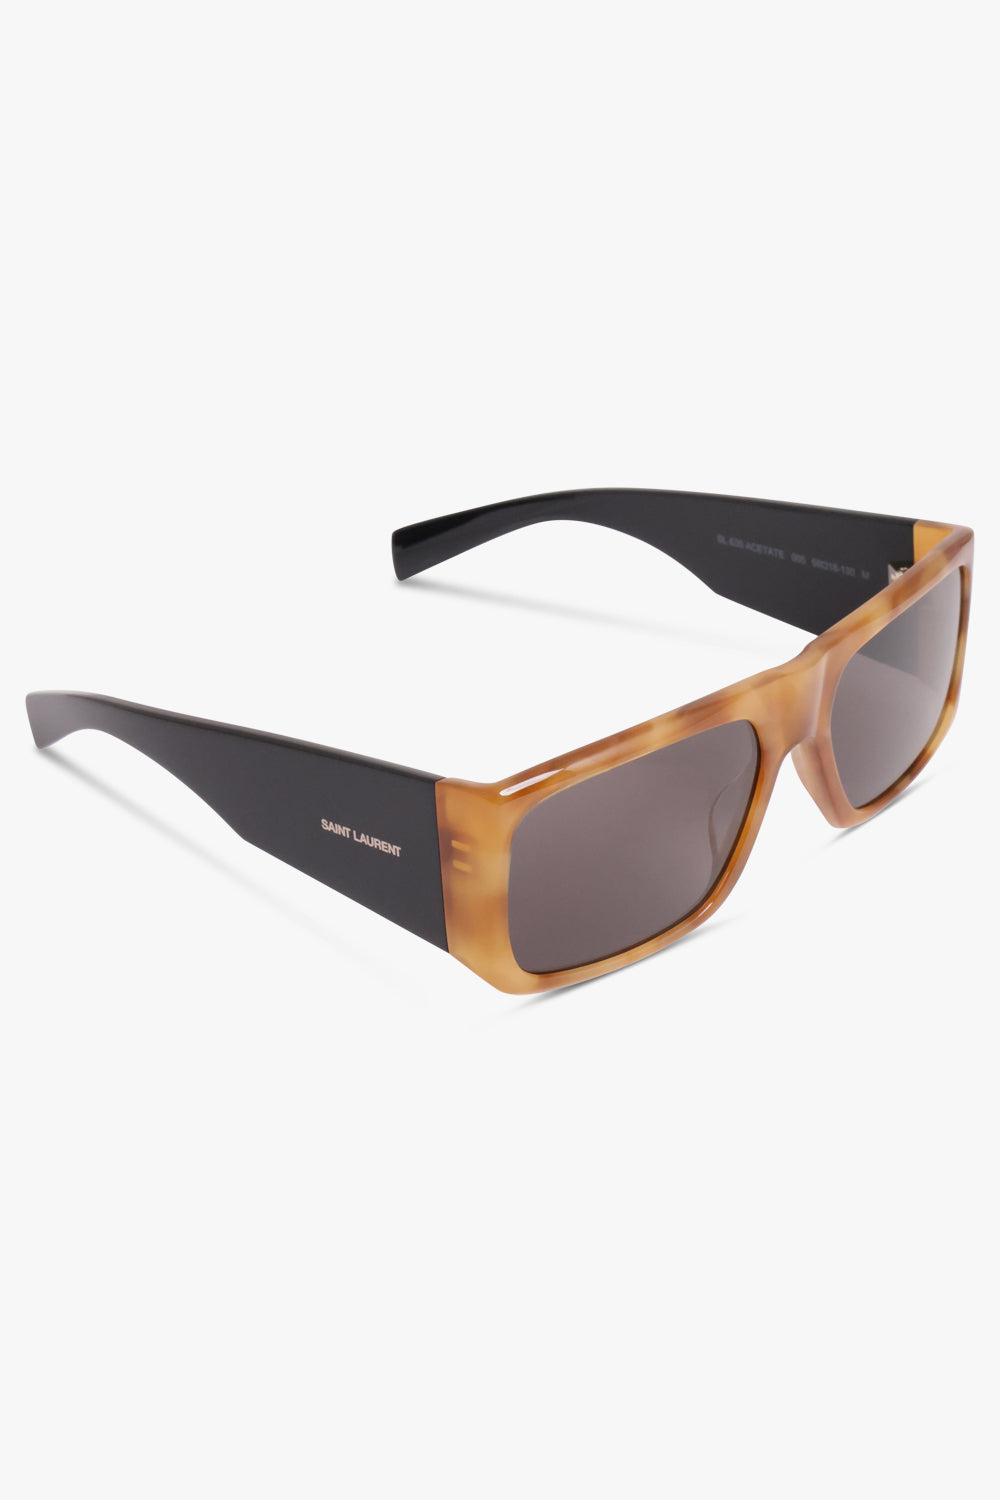 SAINT LAURENT ACCESSORIES BROWN / BLACK SL 635 Square Frame Two Tone Sunglasses | Brown/Black